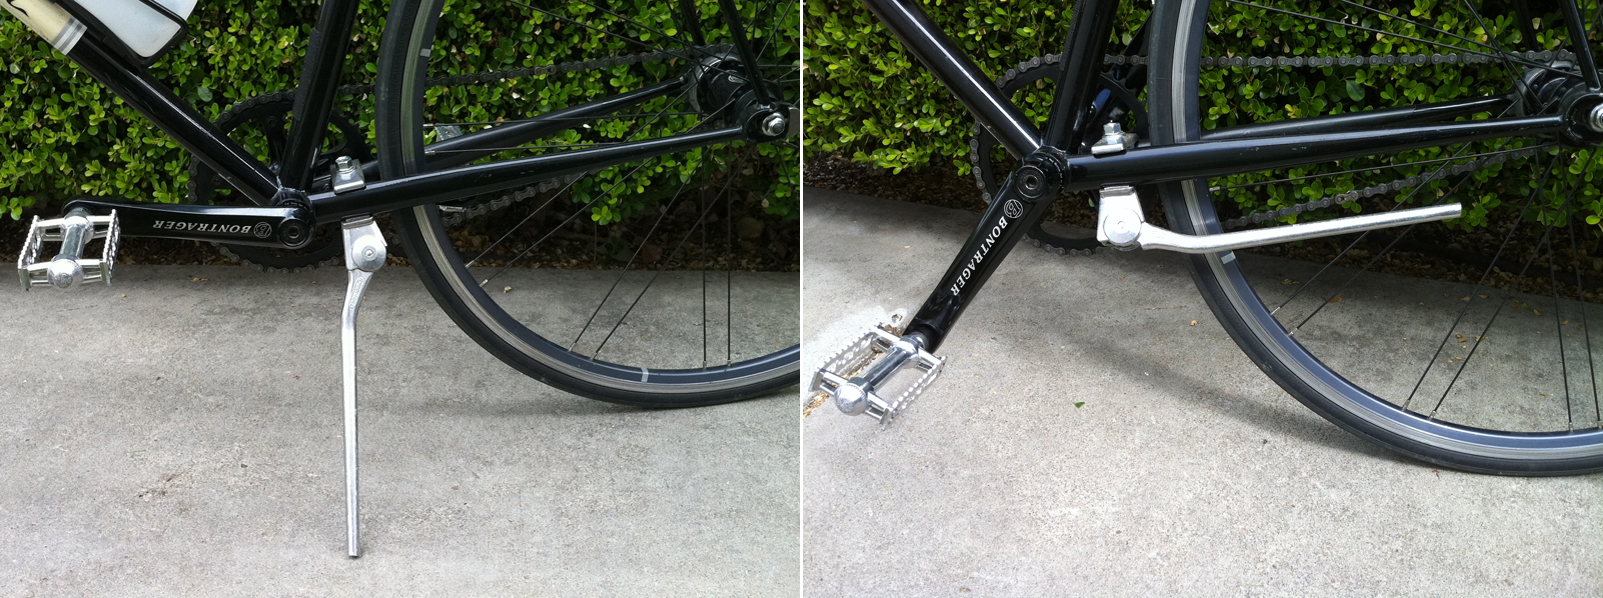 installing a kickstand on a bike